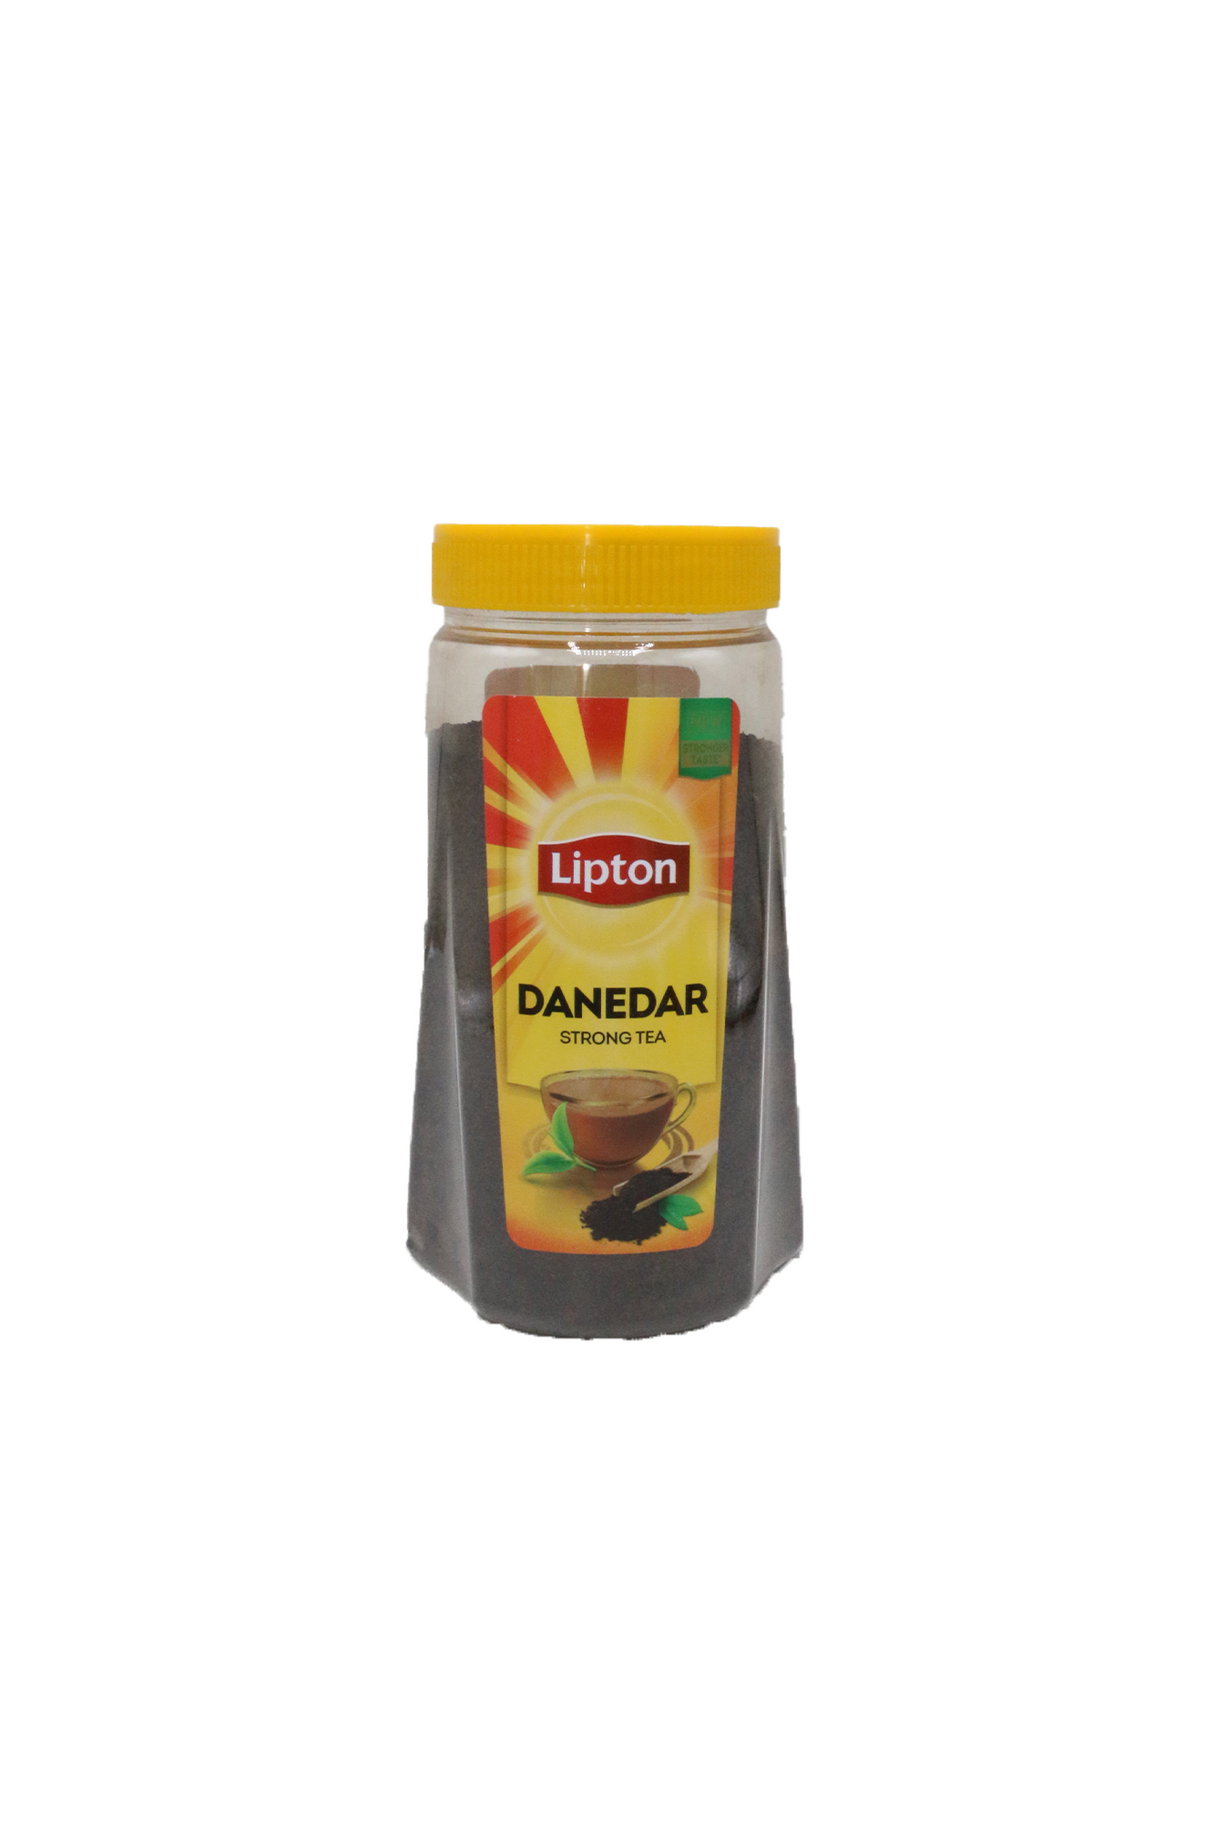 lipton tea jar 475g